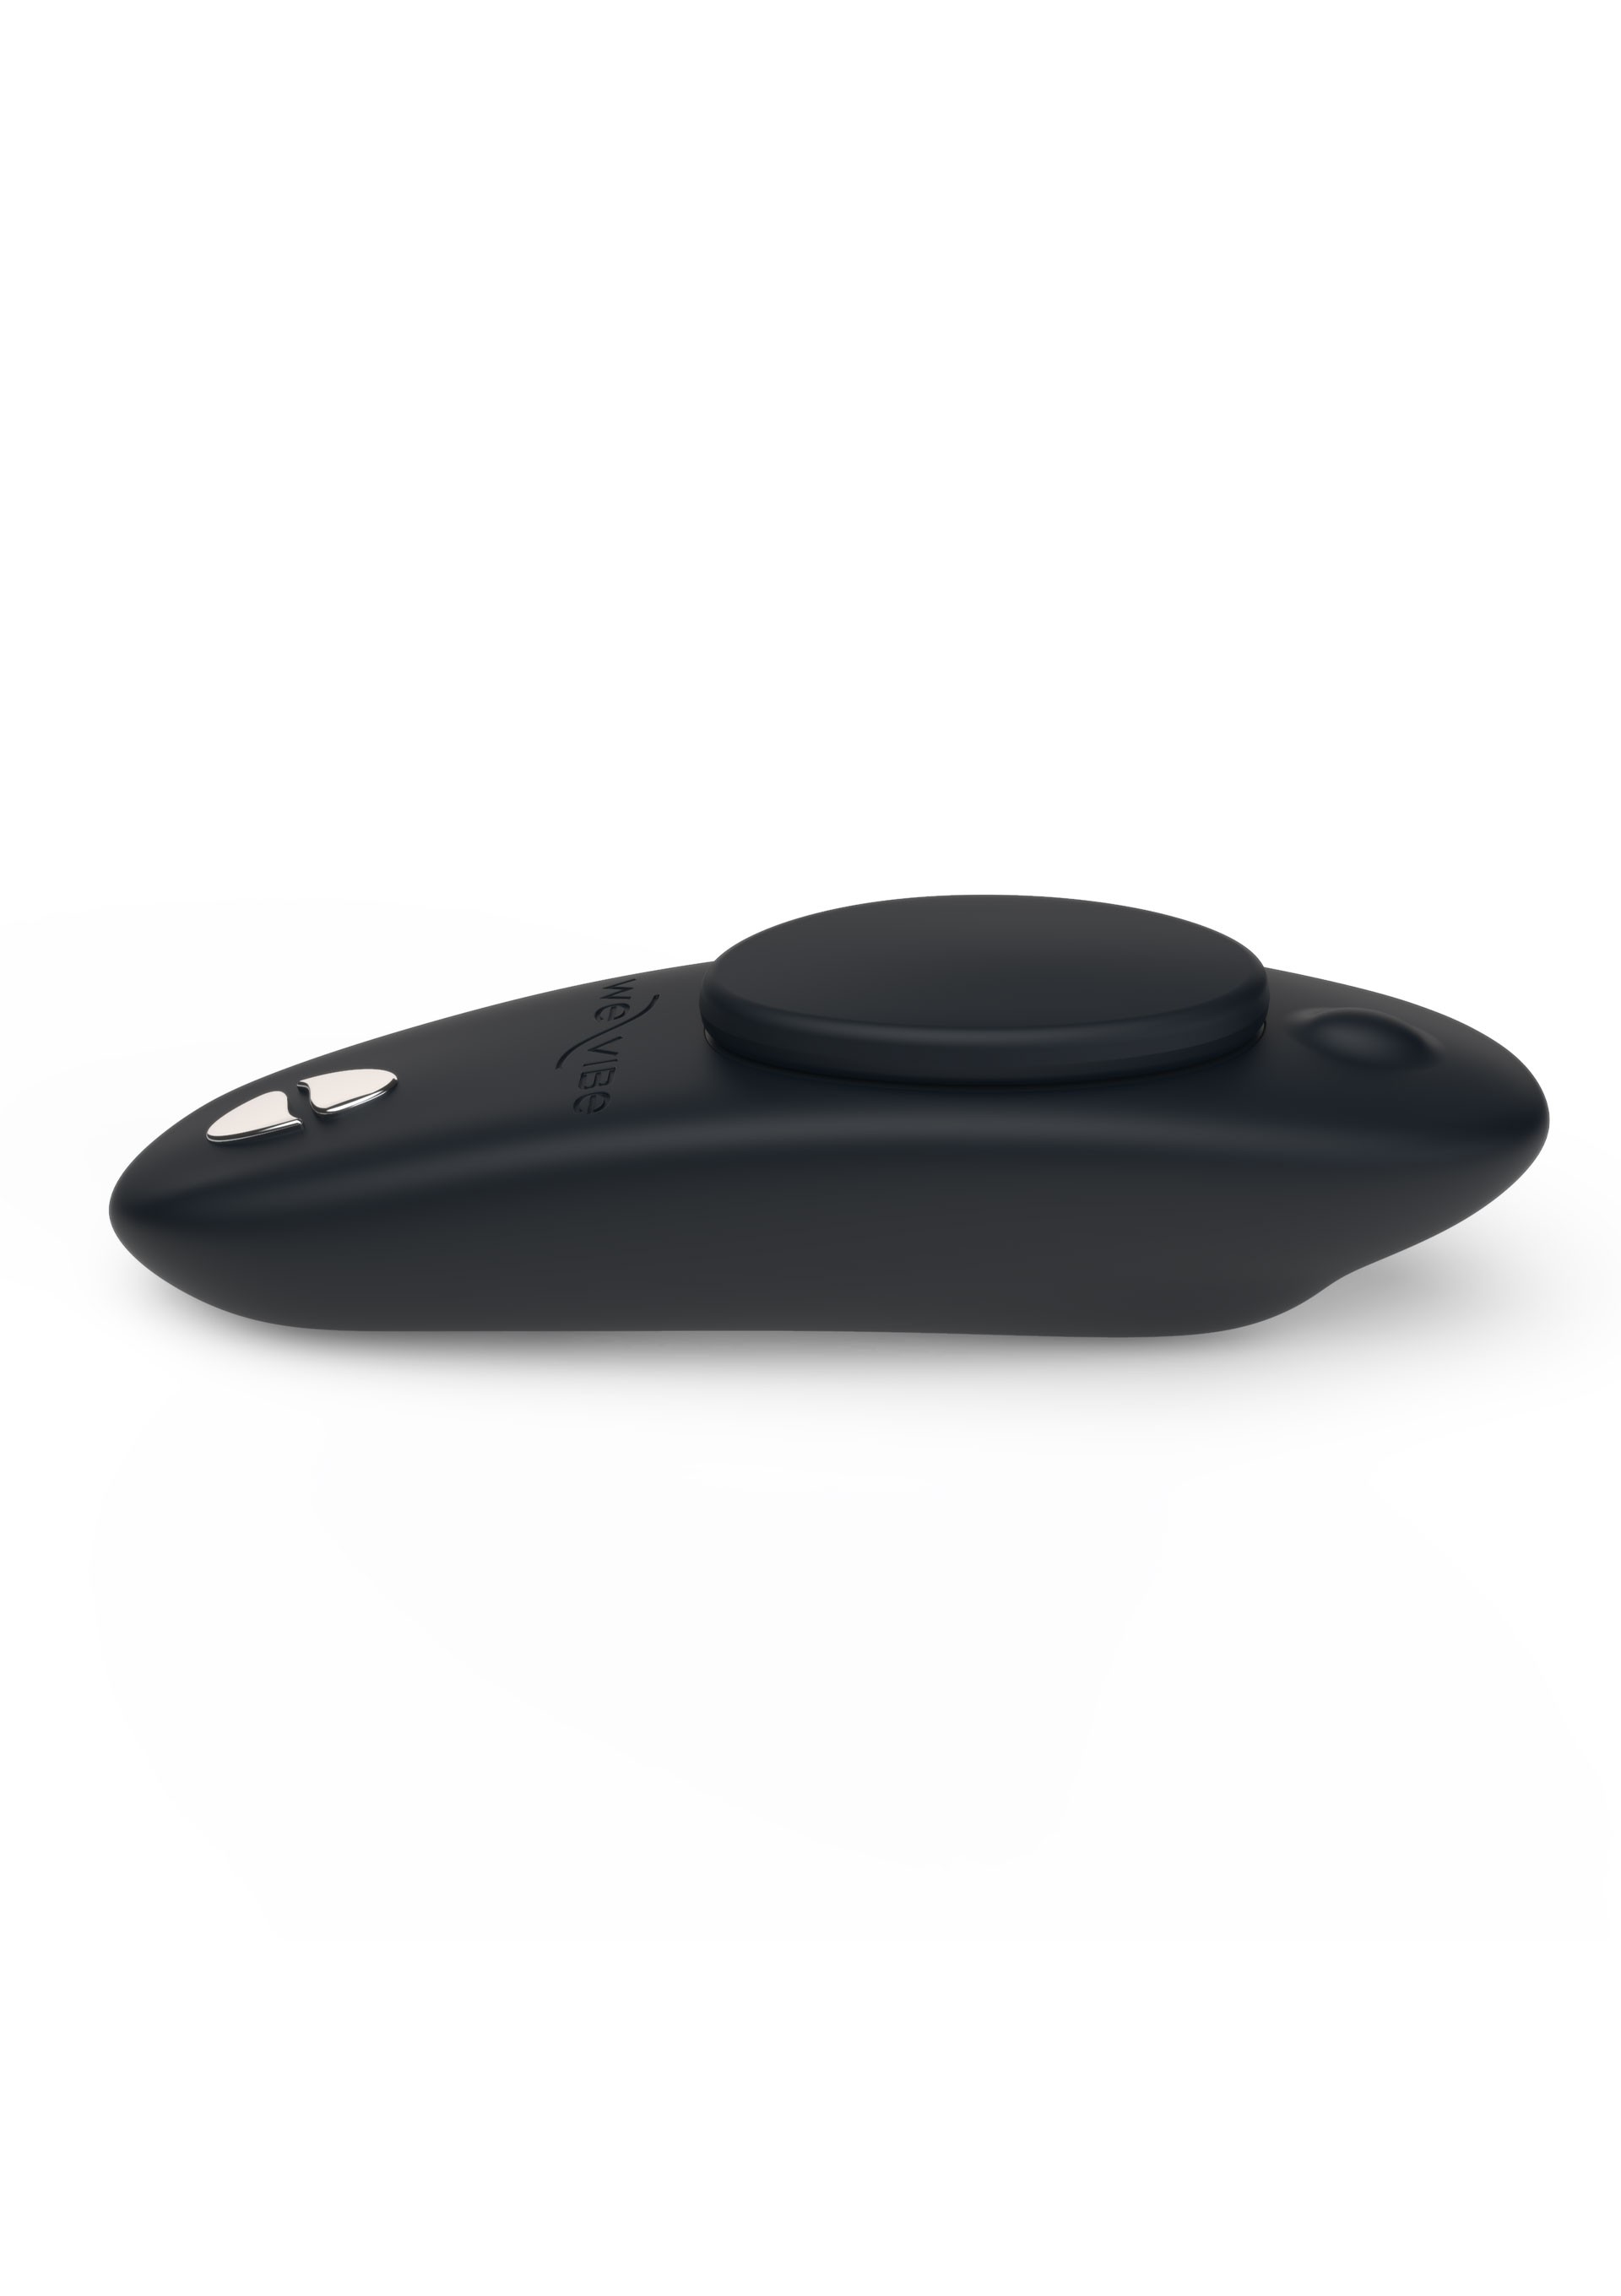 We-Vibe Moxie Phone Control Vibrator Black Giyilebilir Akıllı Telefon Uyumlu Vibratör